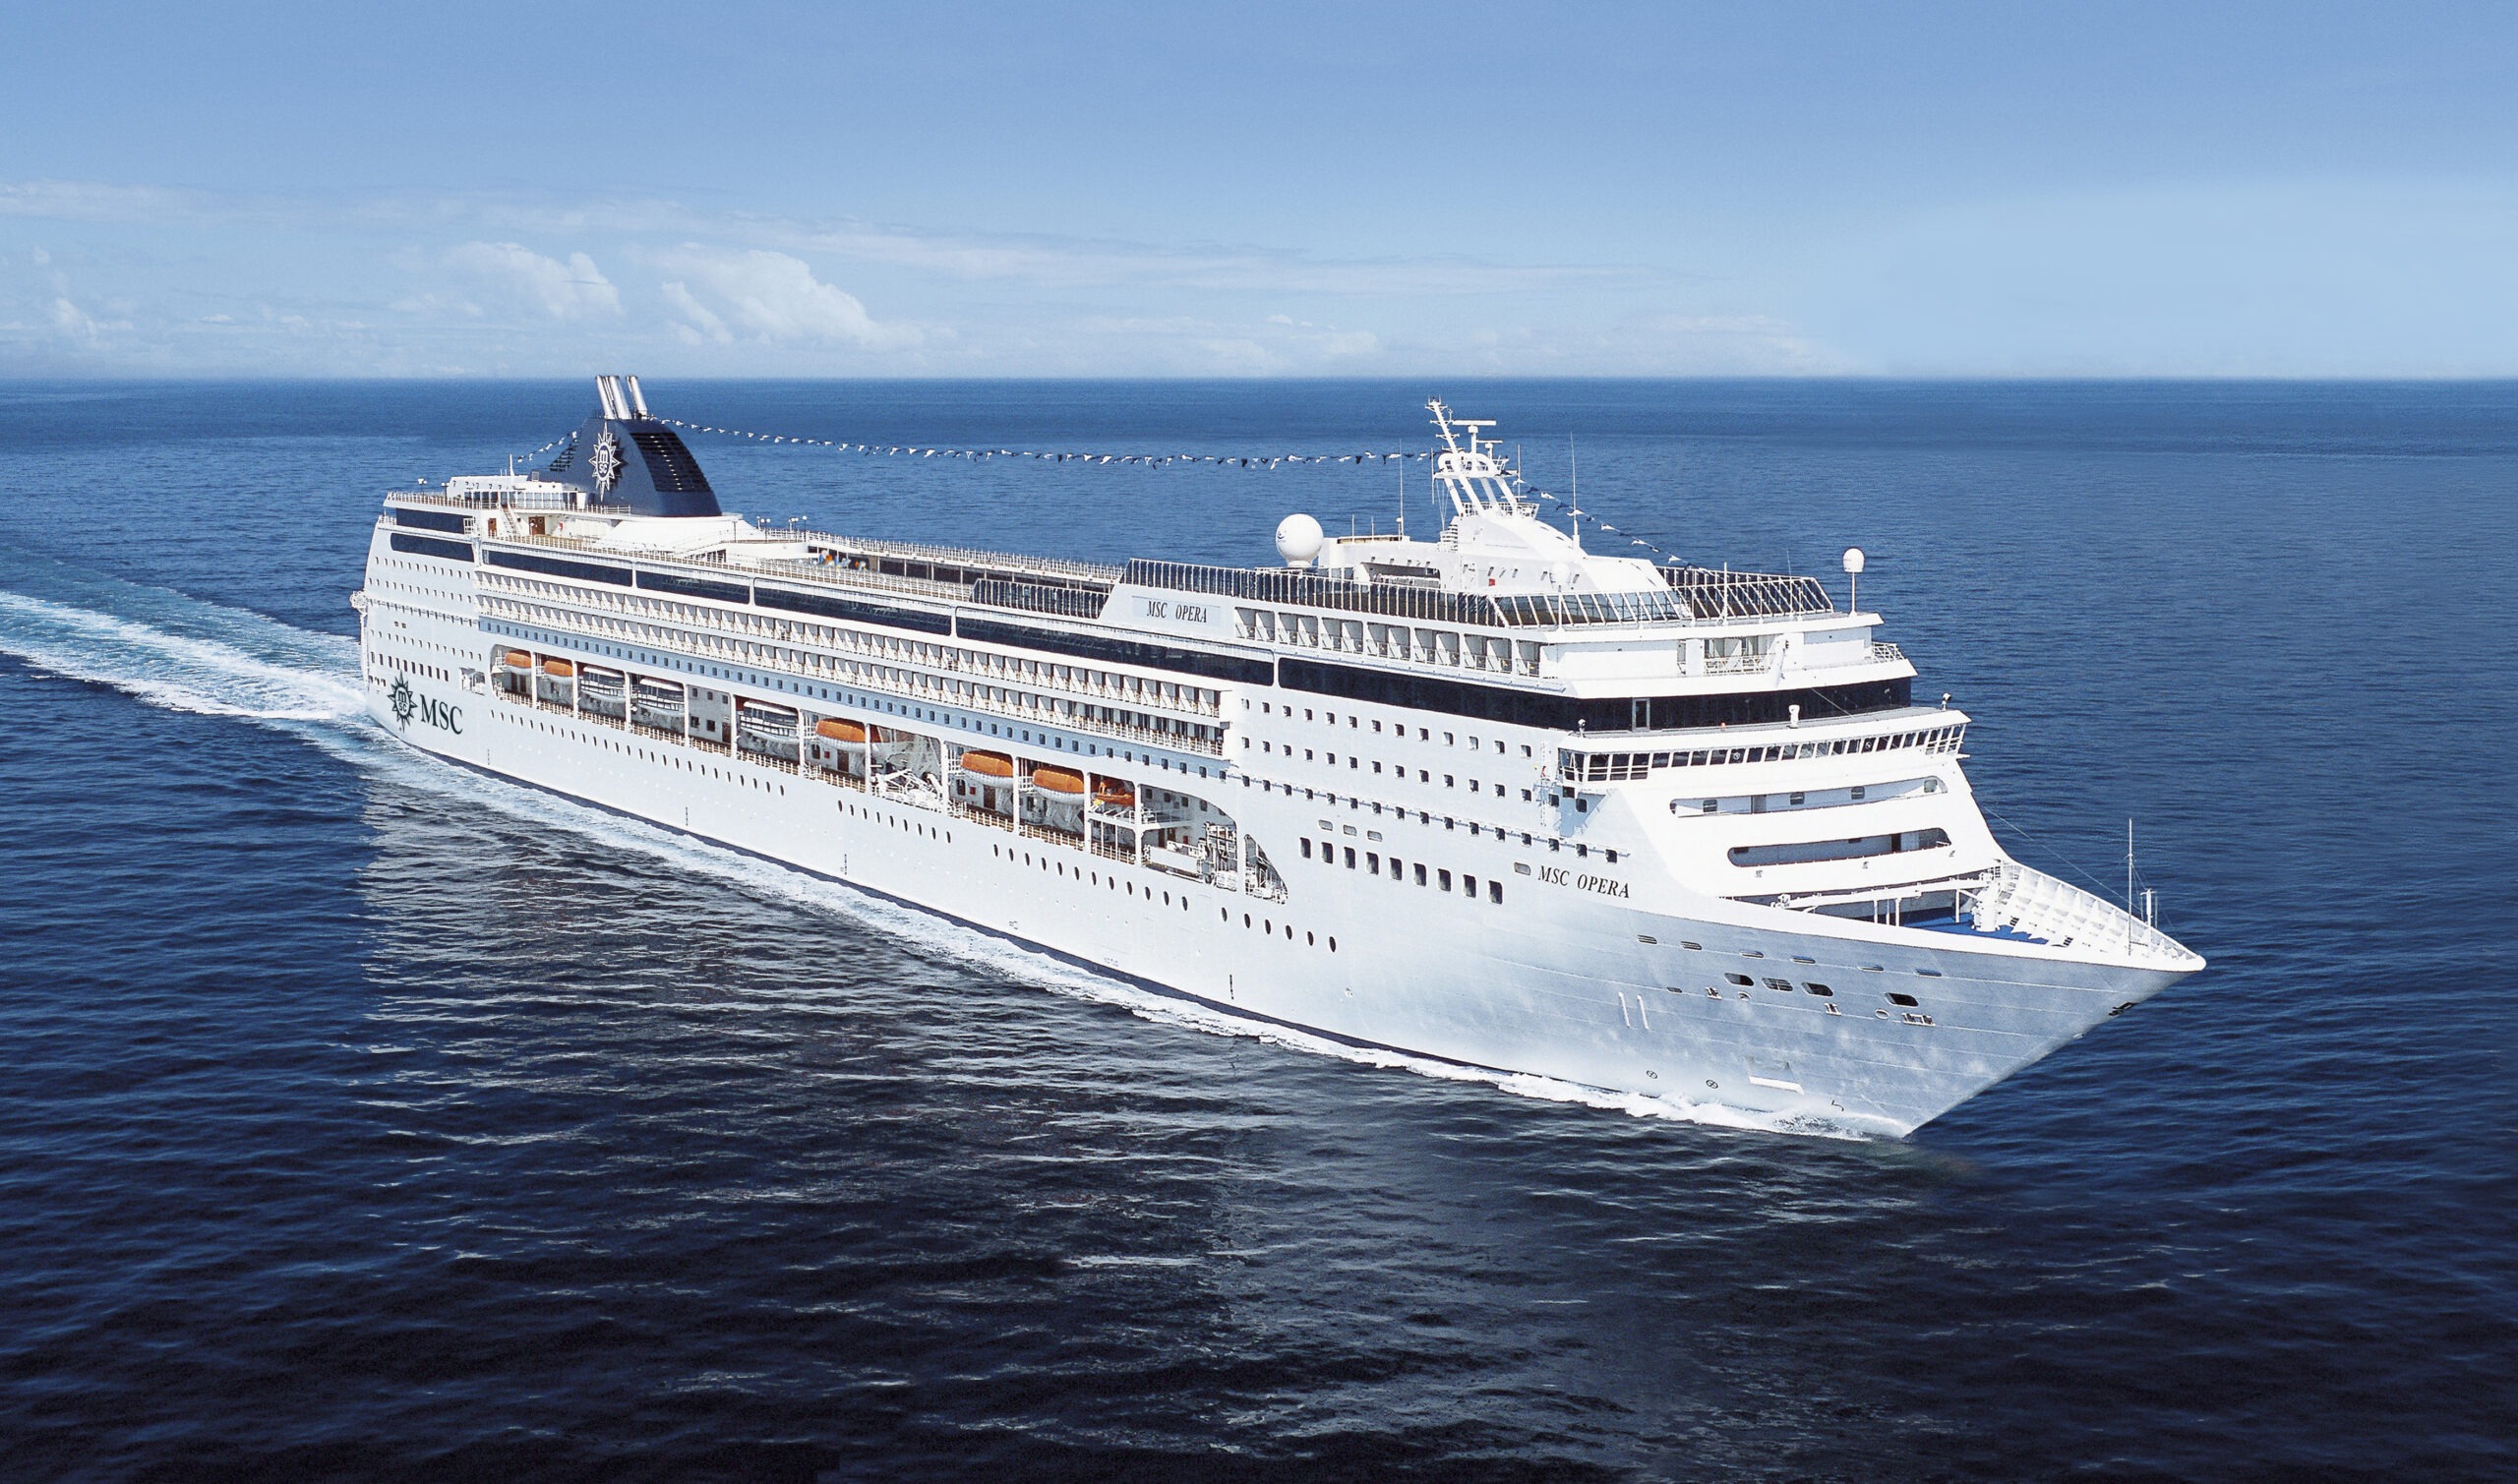 Hoverair X1 on MSC cruise? : r/Cruise